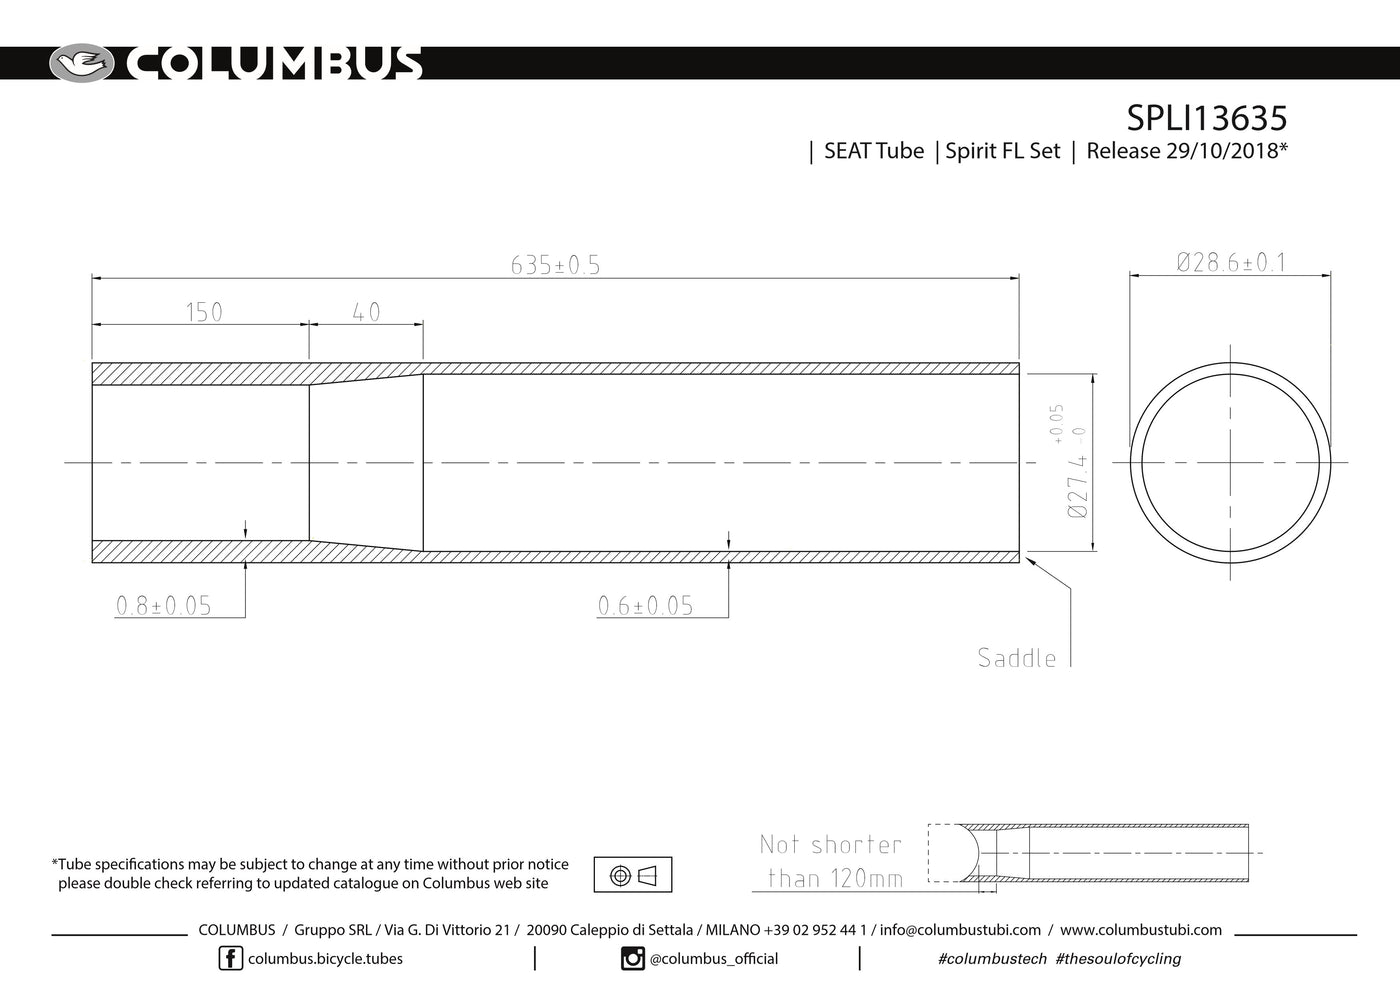 SPLI13635  Columbus Tubing Spirit for lugs single butted seat tube - 28.6 dia. - .8/.6 - length = 635